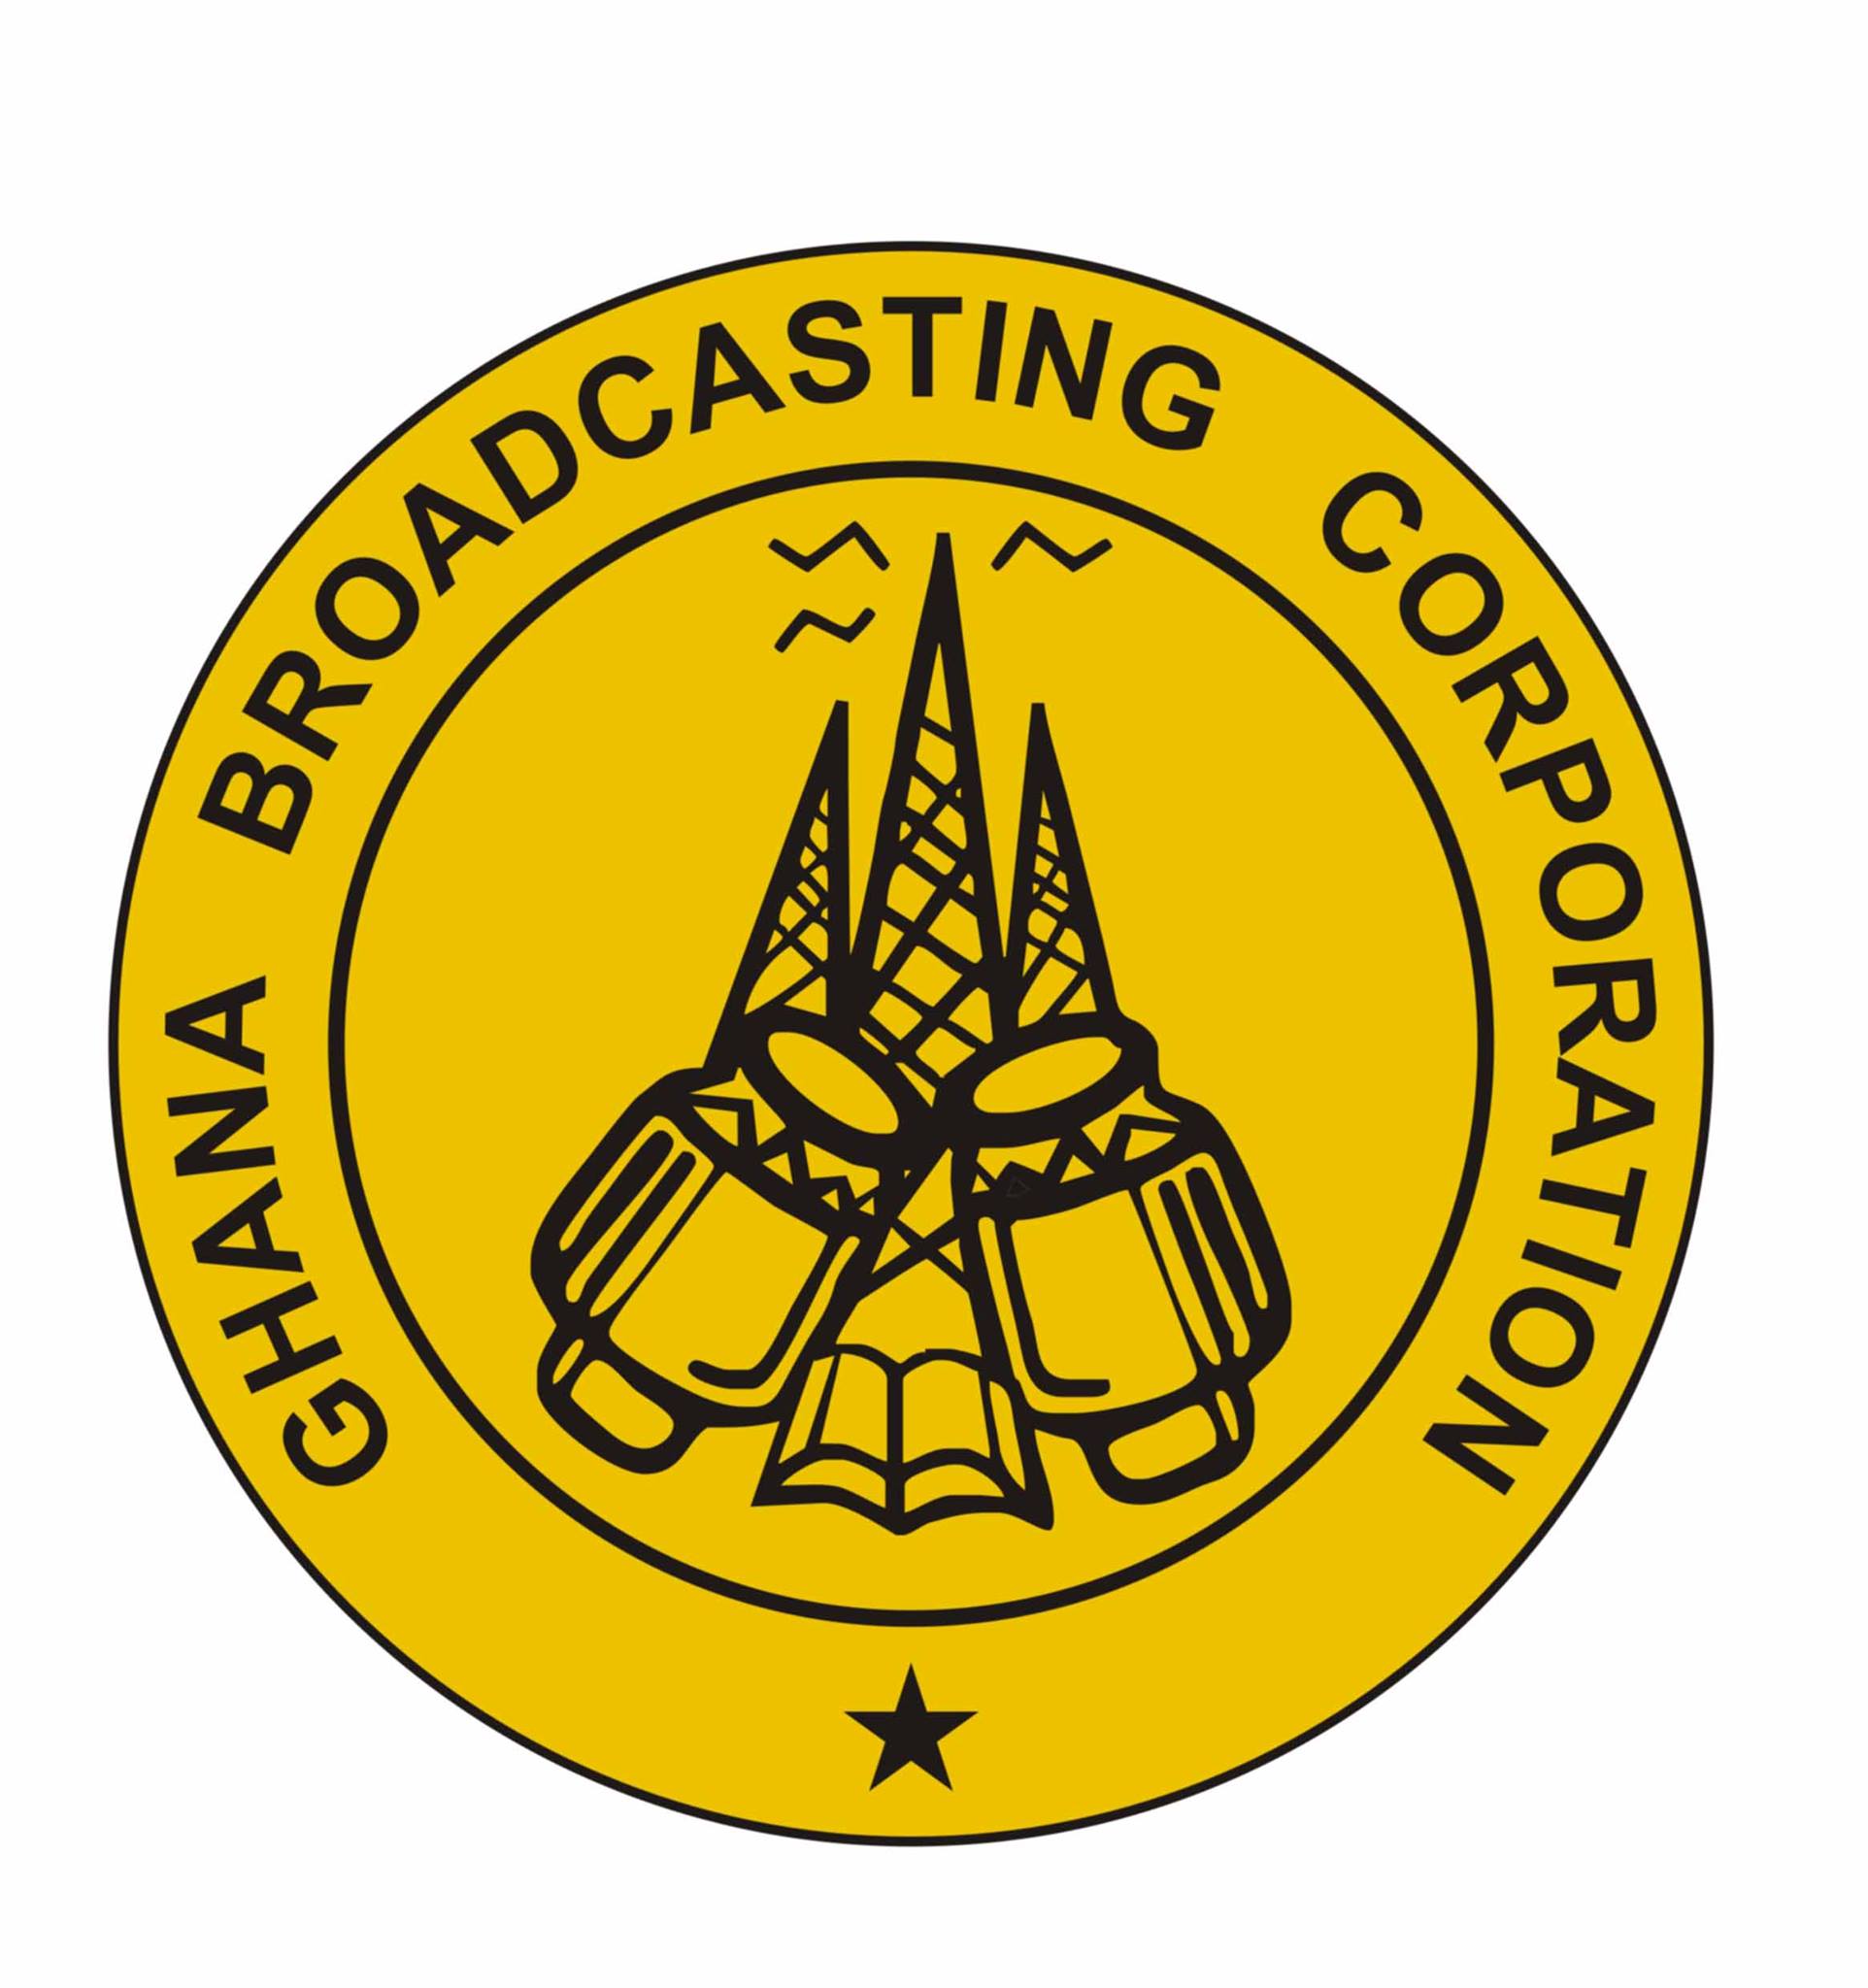 GBC Broadacsting Corporation